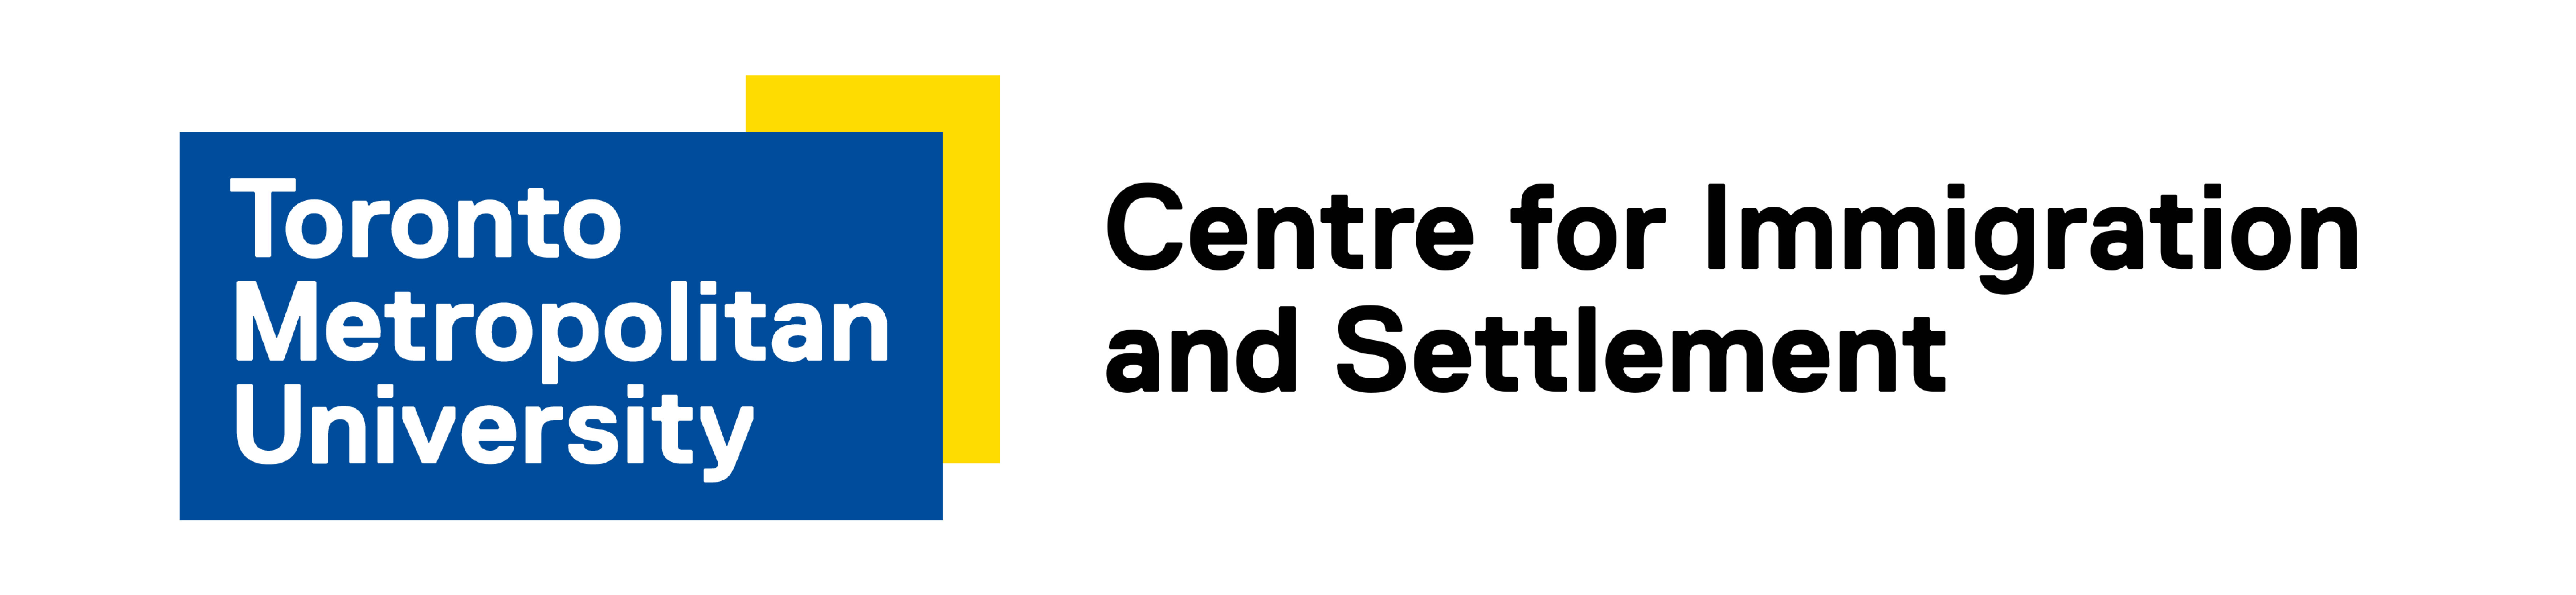 Toronto Metropolitan Centre for Immigration and Settlement logo